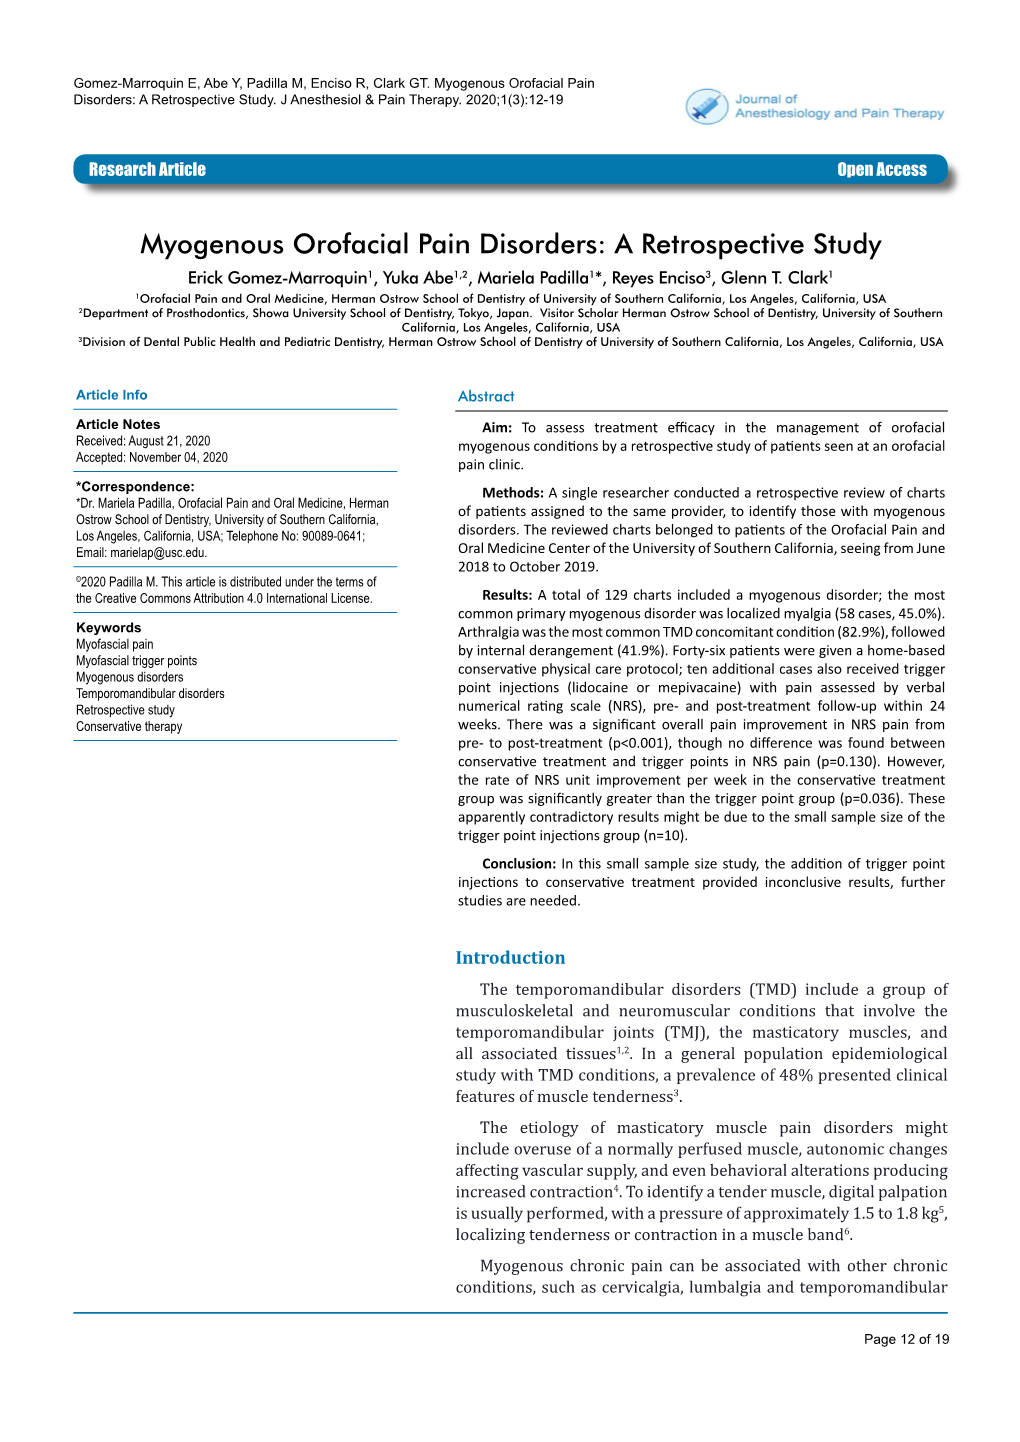 Myogenous Orofacial Pain Disorders: a Retrospective Study